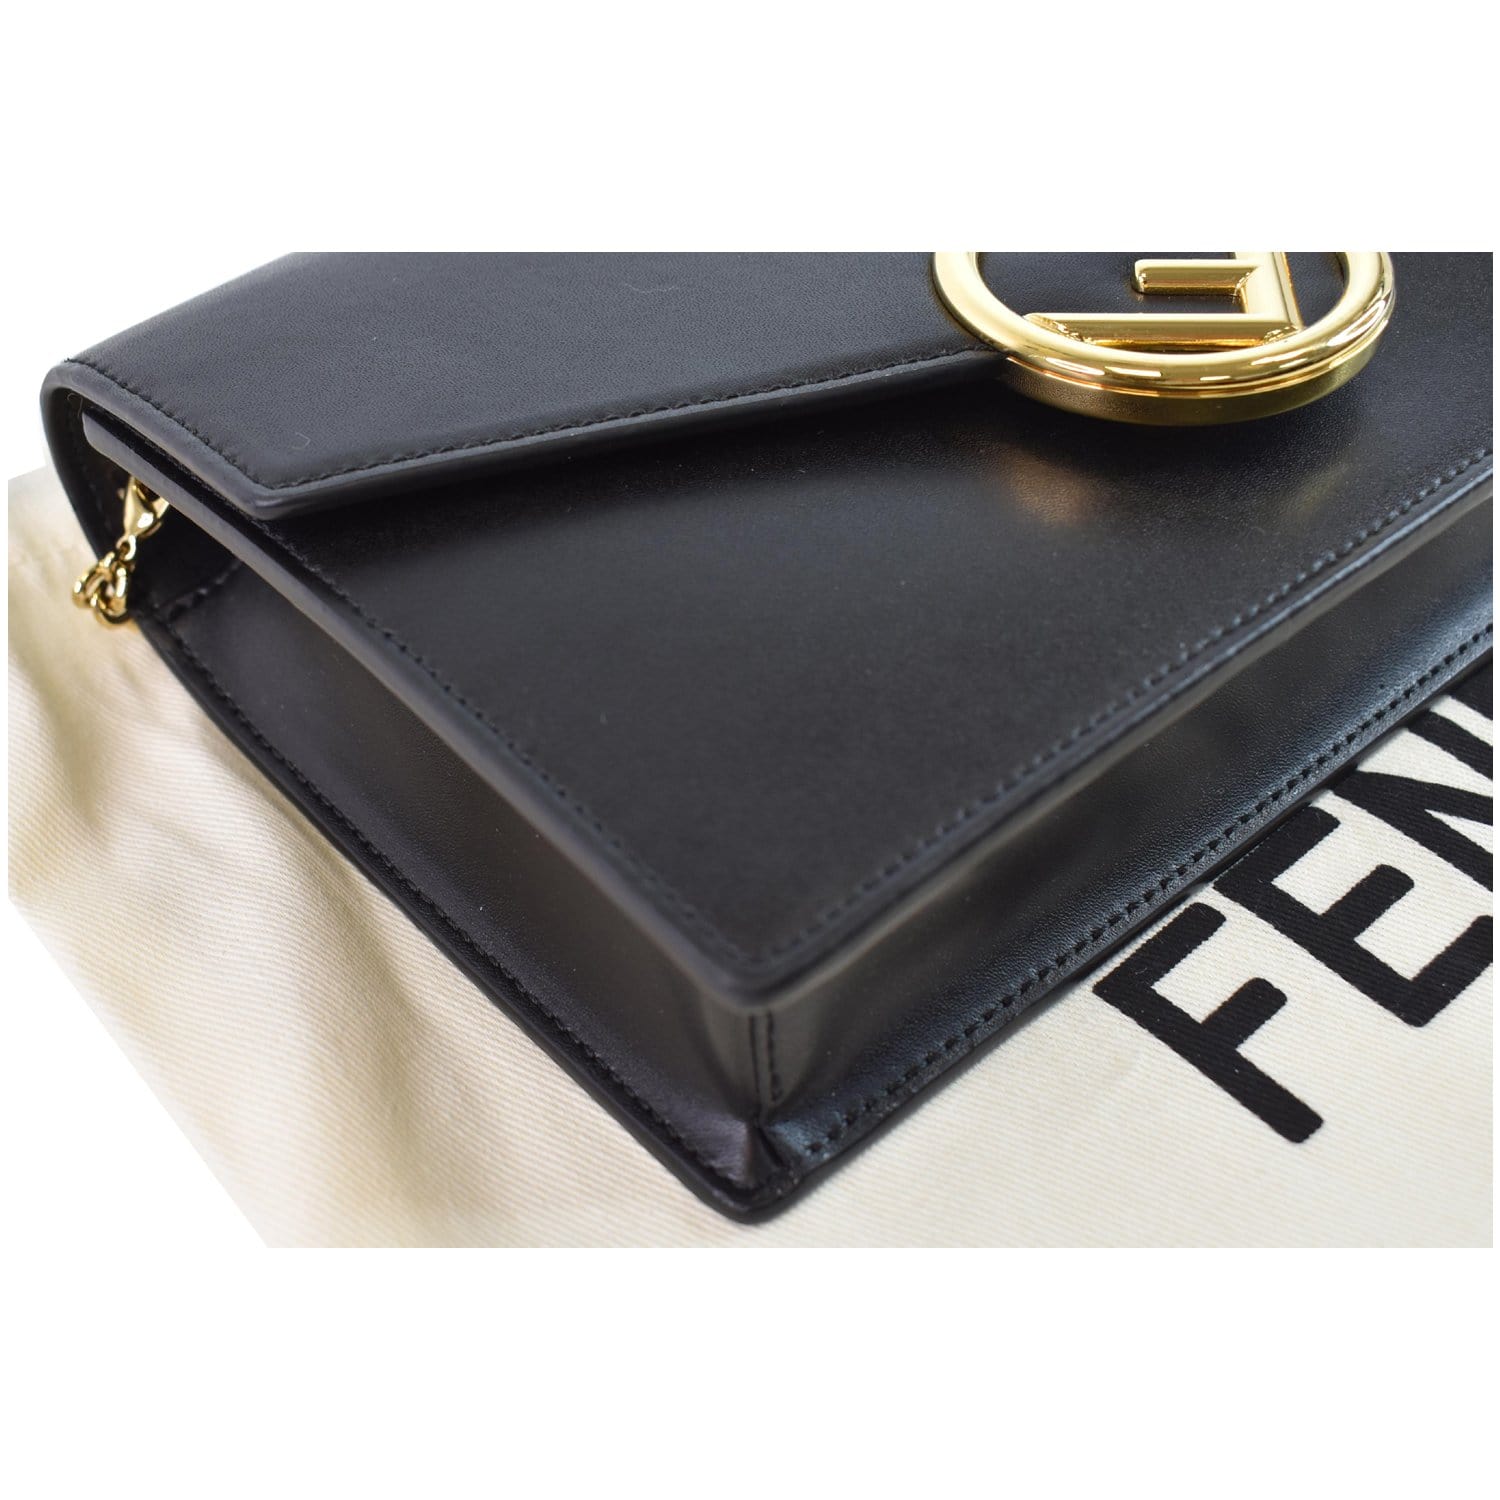 Fendi Black Leather Wallet on Chain Fendi